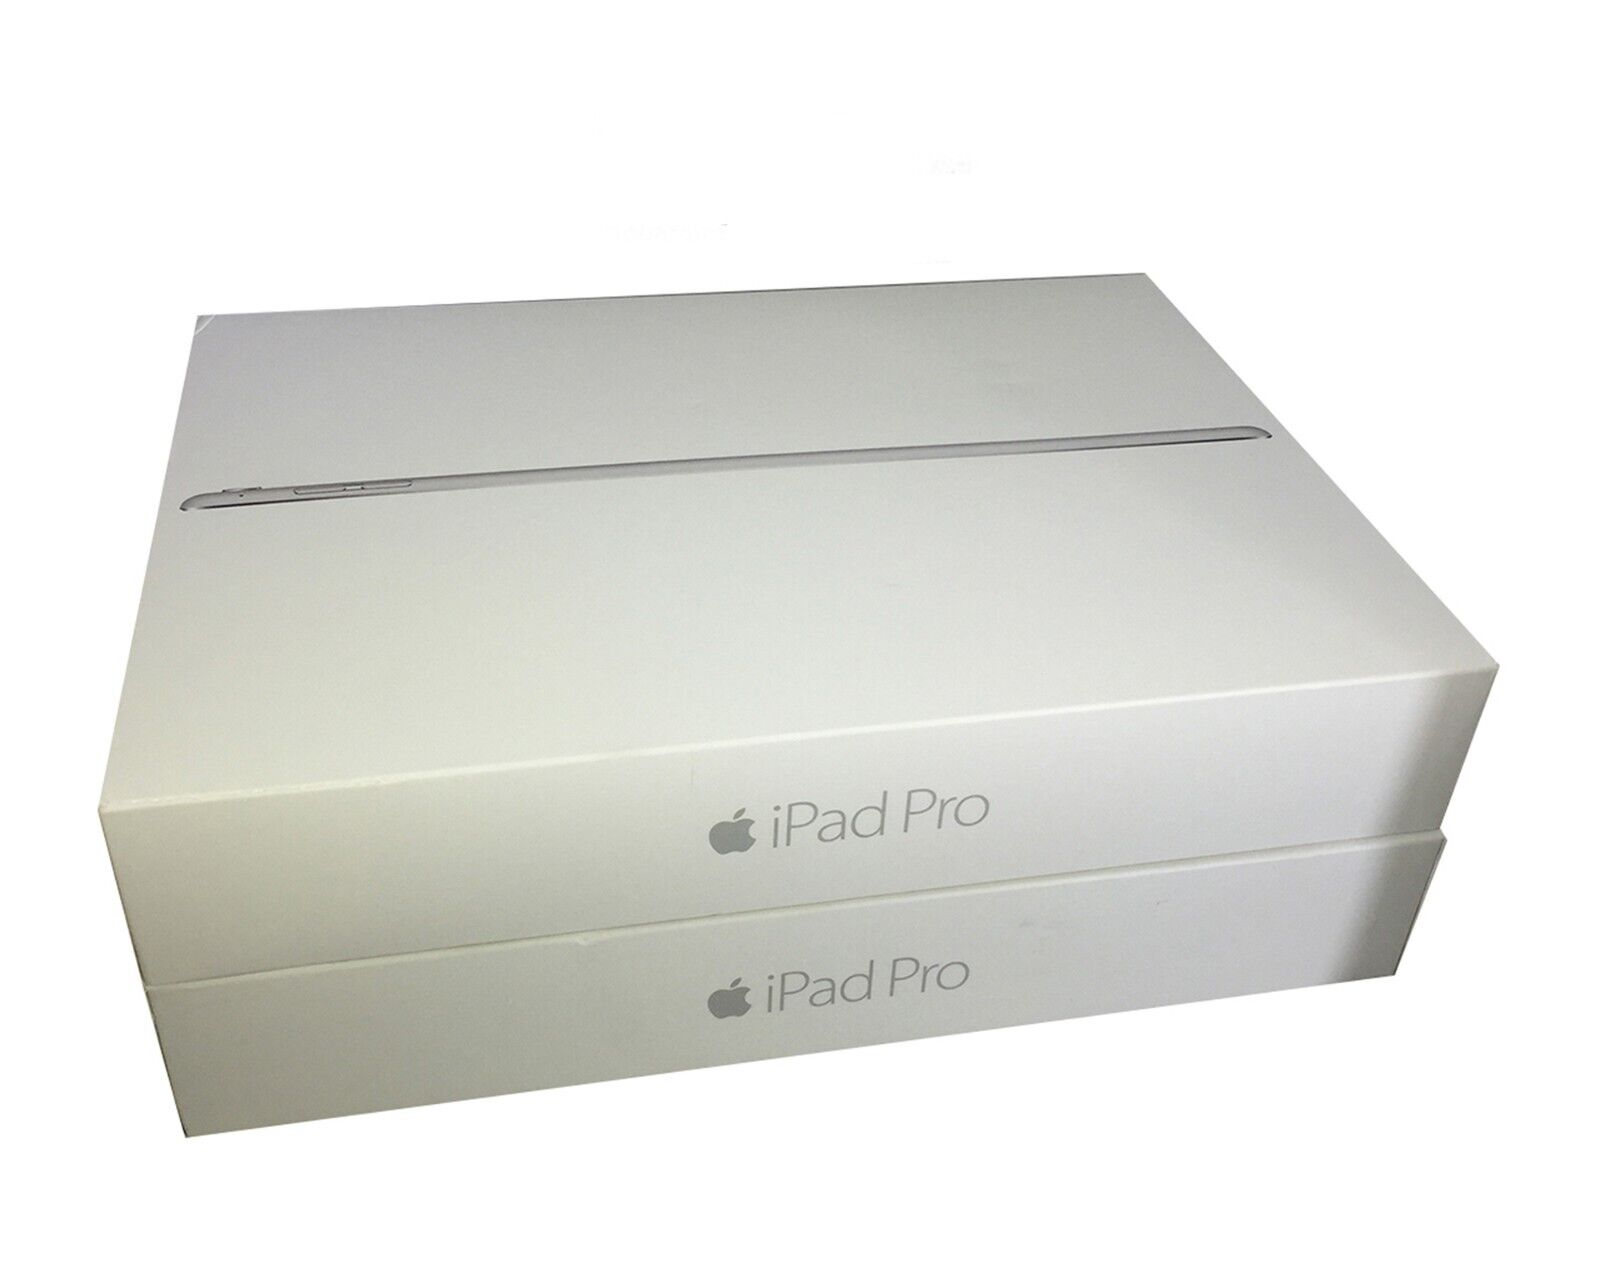 Original Box - Apple iPad Pro, 256GB, Space Gray, Wi-Fi +4G Unlocked, 12.9-inch